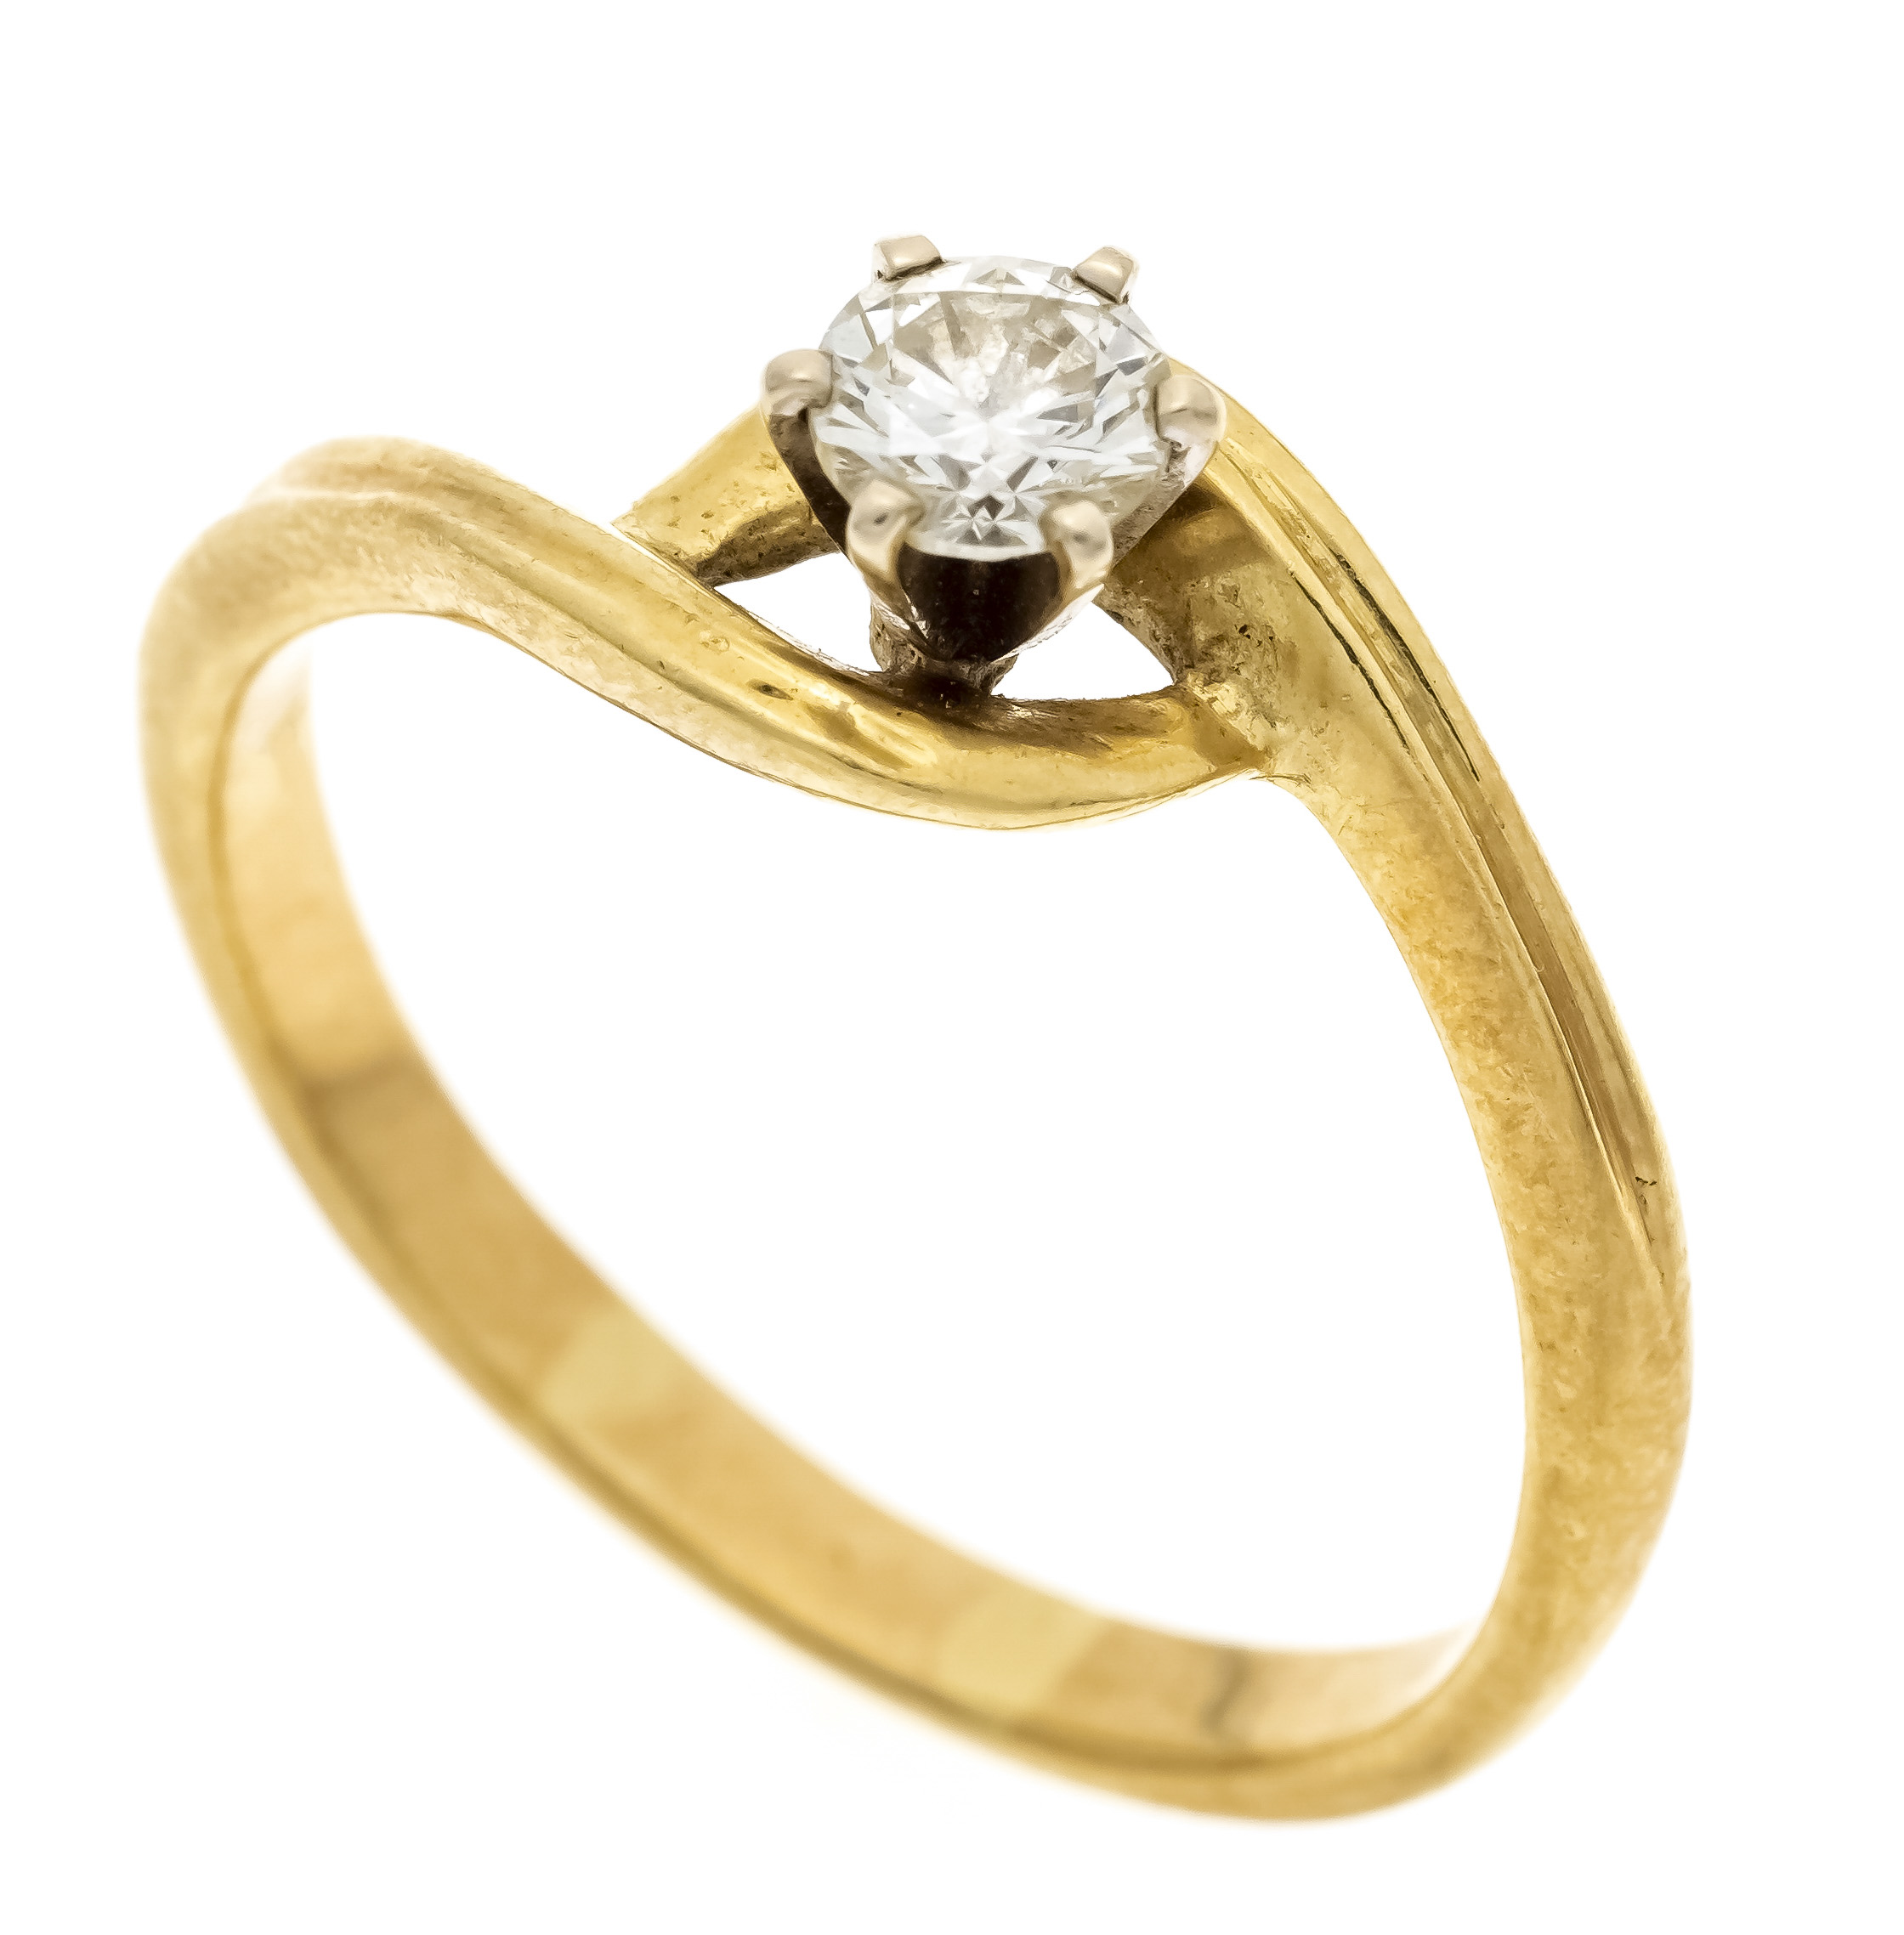 Diamond solitaire ring GG/WG 750/000 with one brilliant-cut diamond 0.35 ct l.tintedW/VS-SI, RG